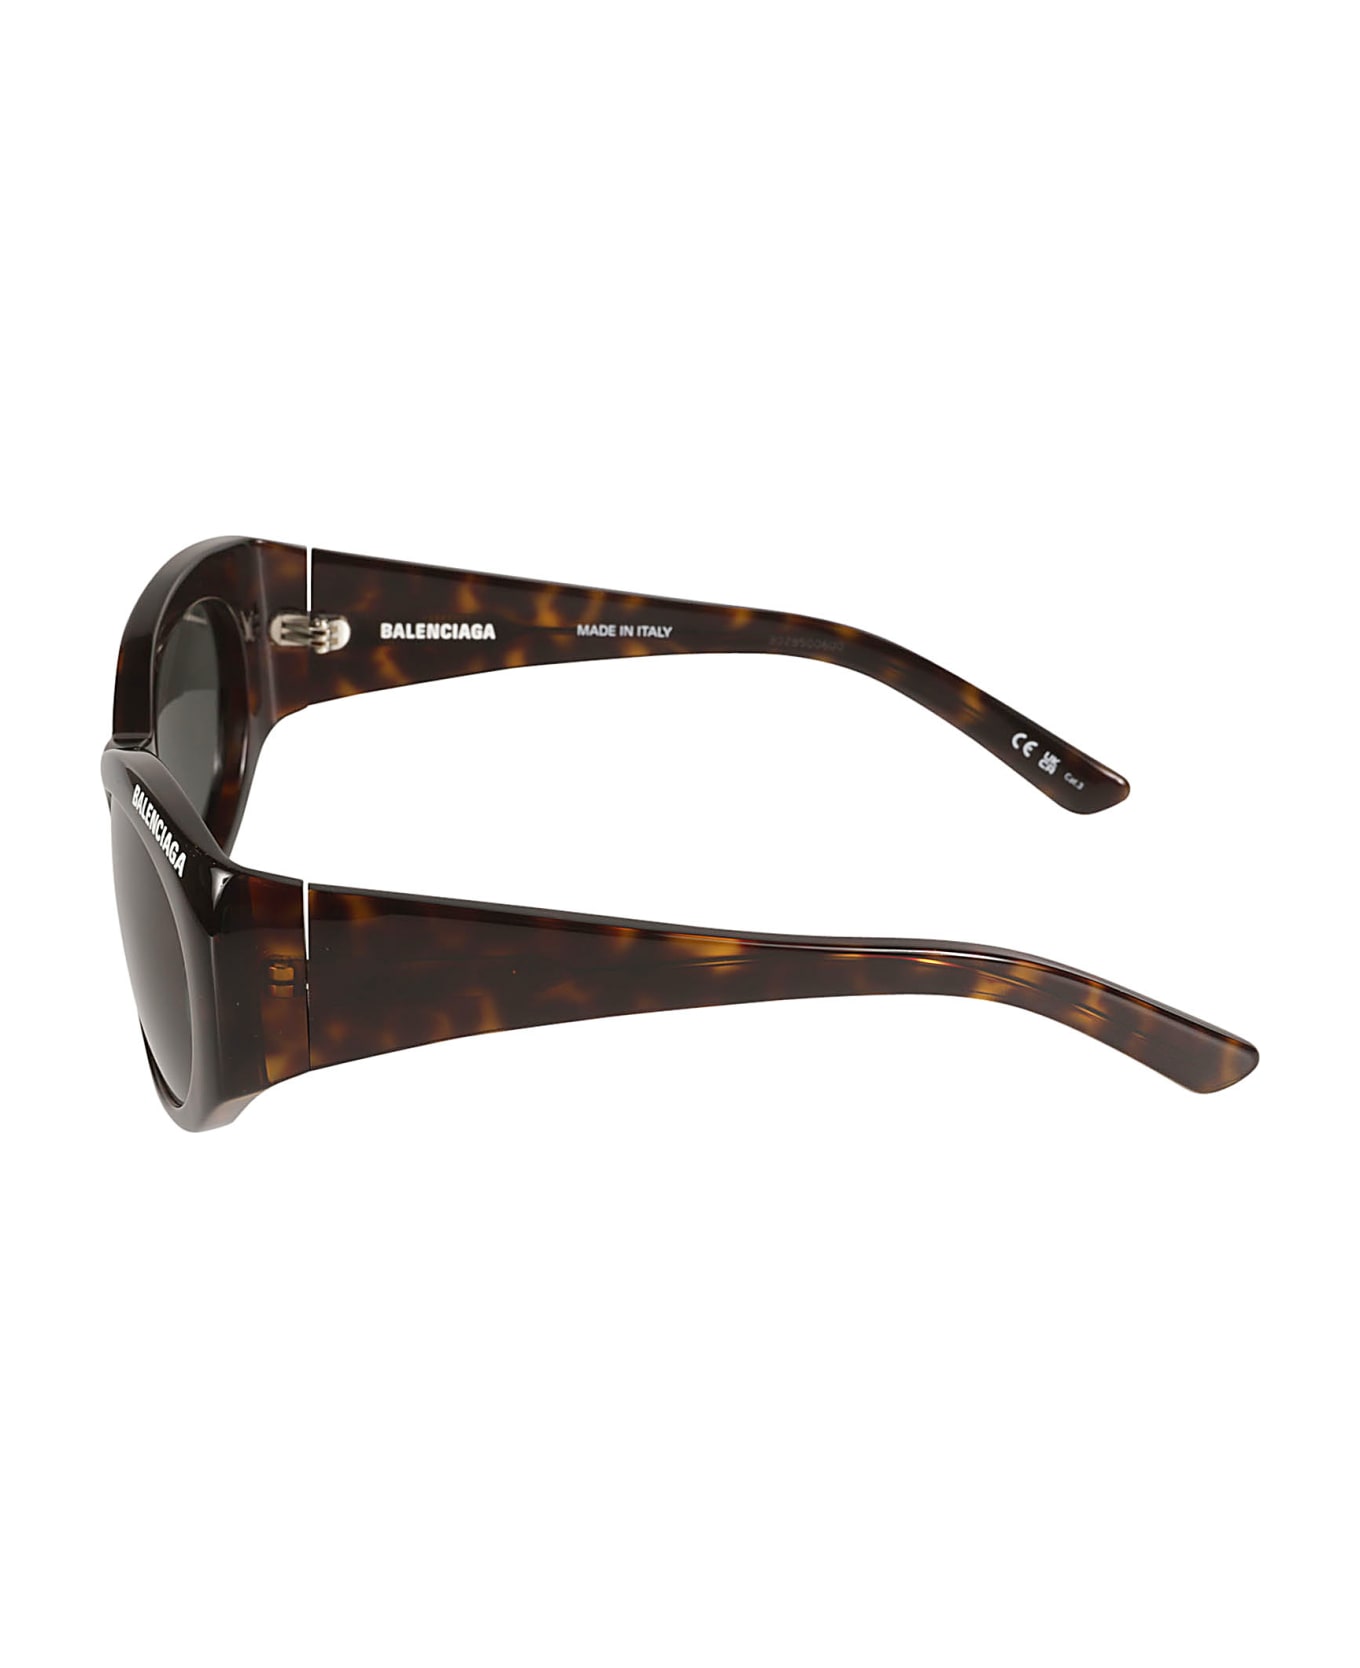 Balenciaga Eyewear Flame Effect Round Frame Sunglasses - Havana/Green